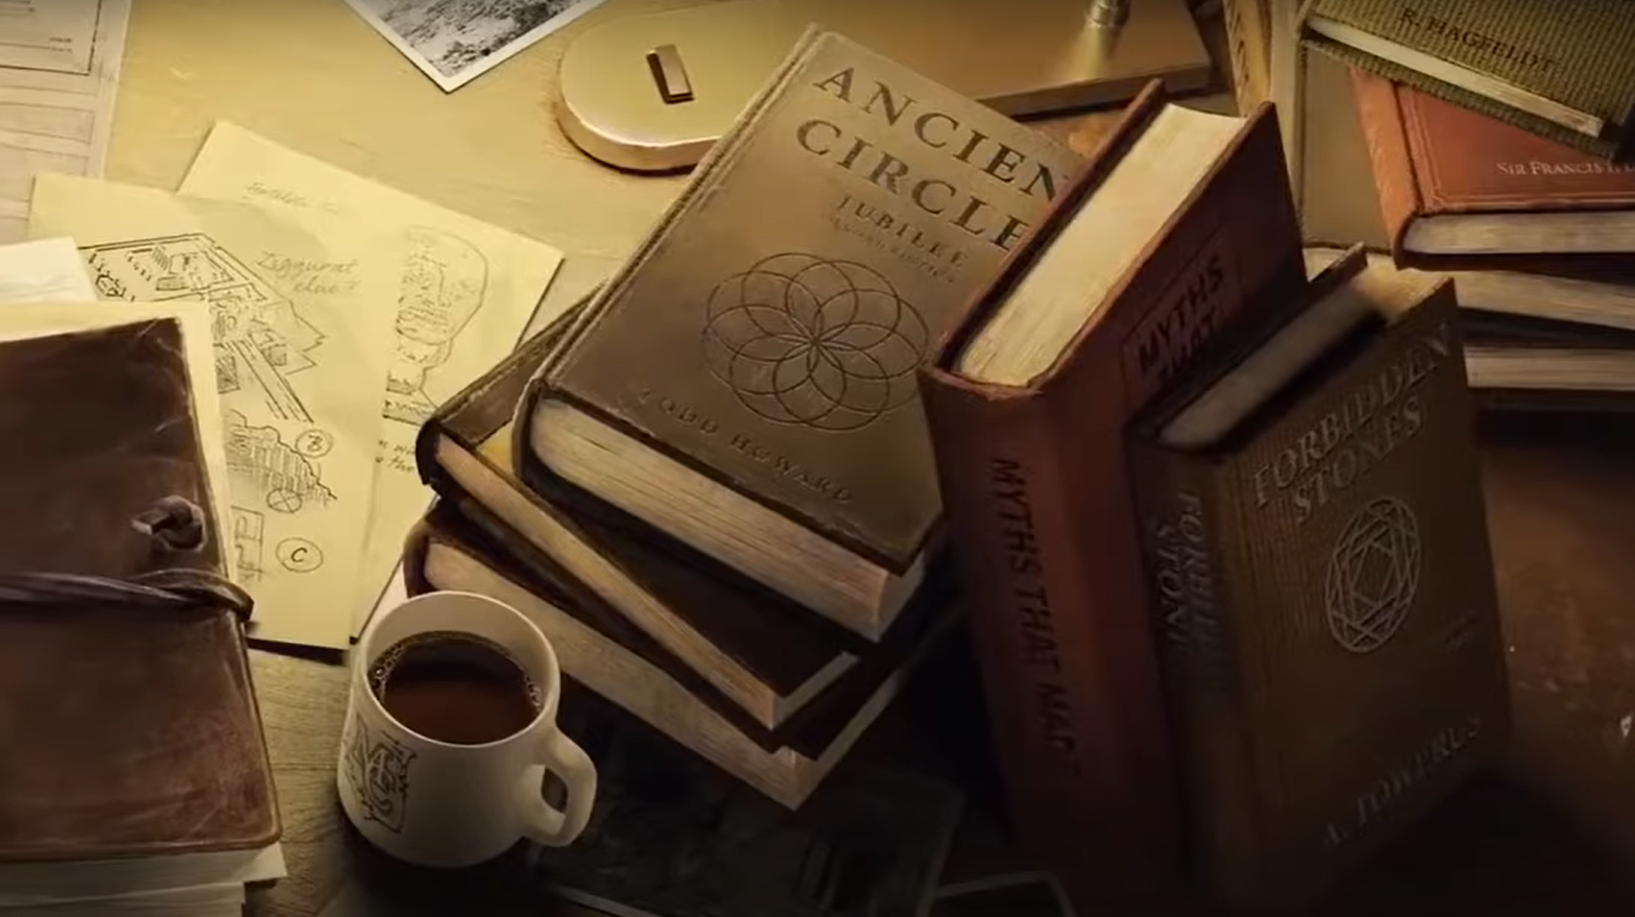 MachineGames'印第安纳琼斯预告片截图，显示一本名为Ancient Circles的书